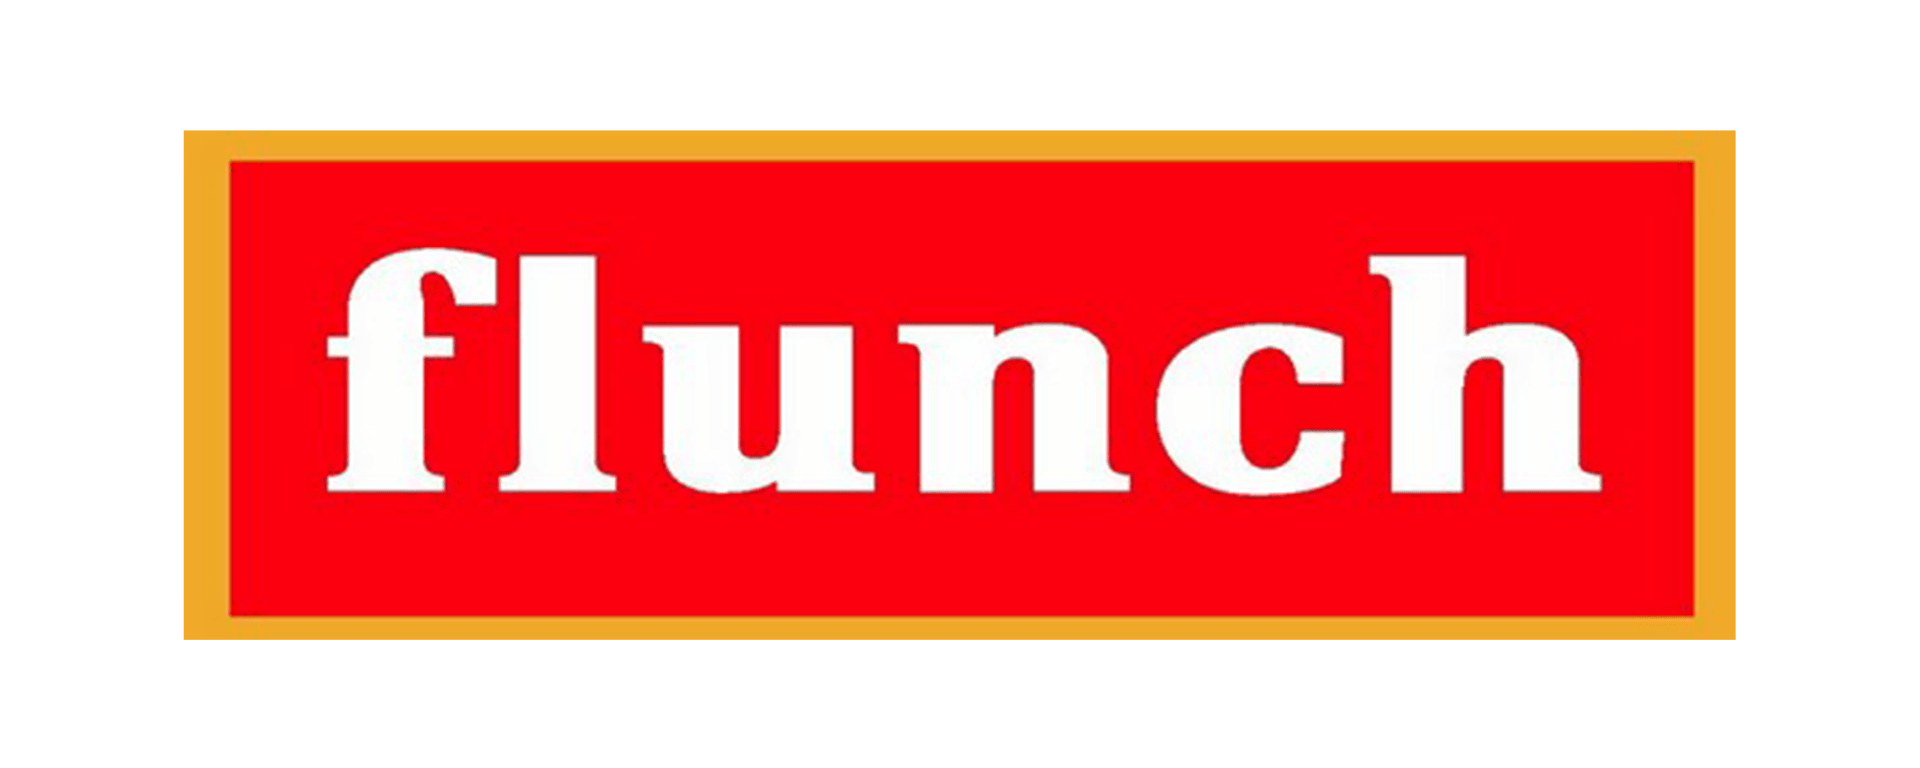 Galerie Bonne source - Logo restaurant Flunch